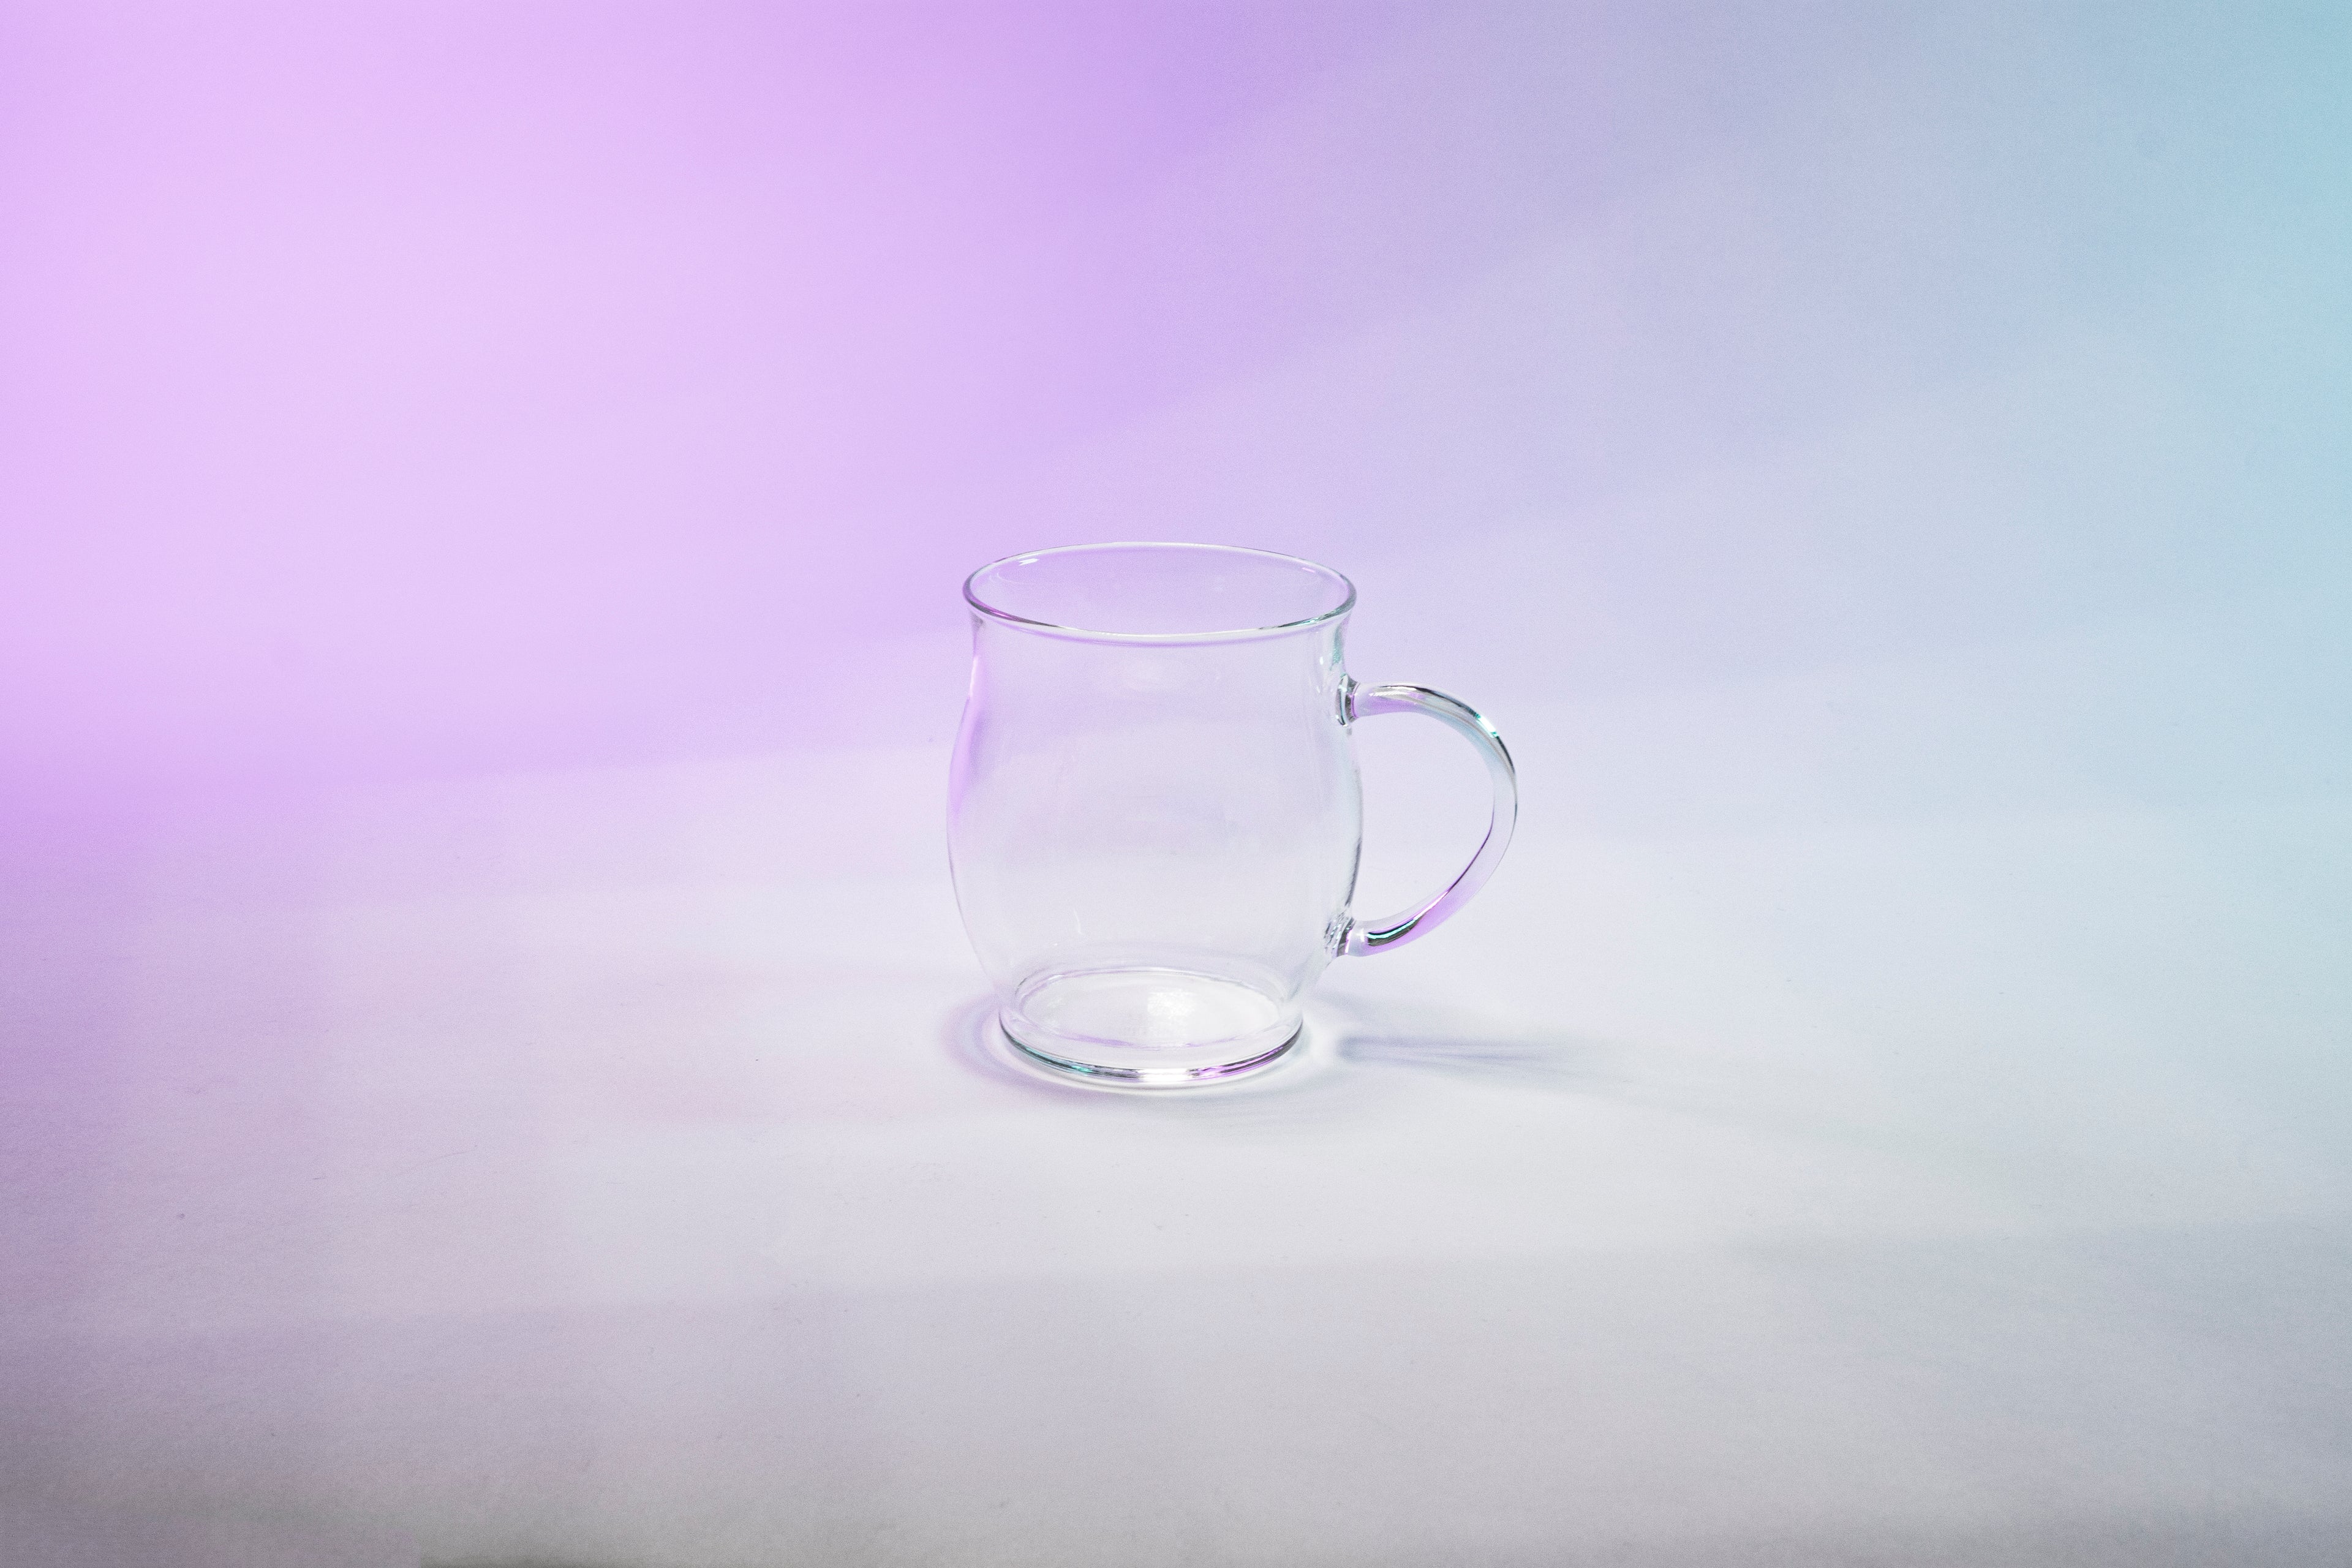 Glass mug with tulip shaped body and glass handle.